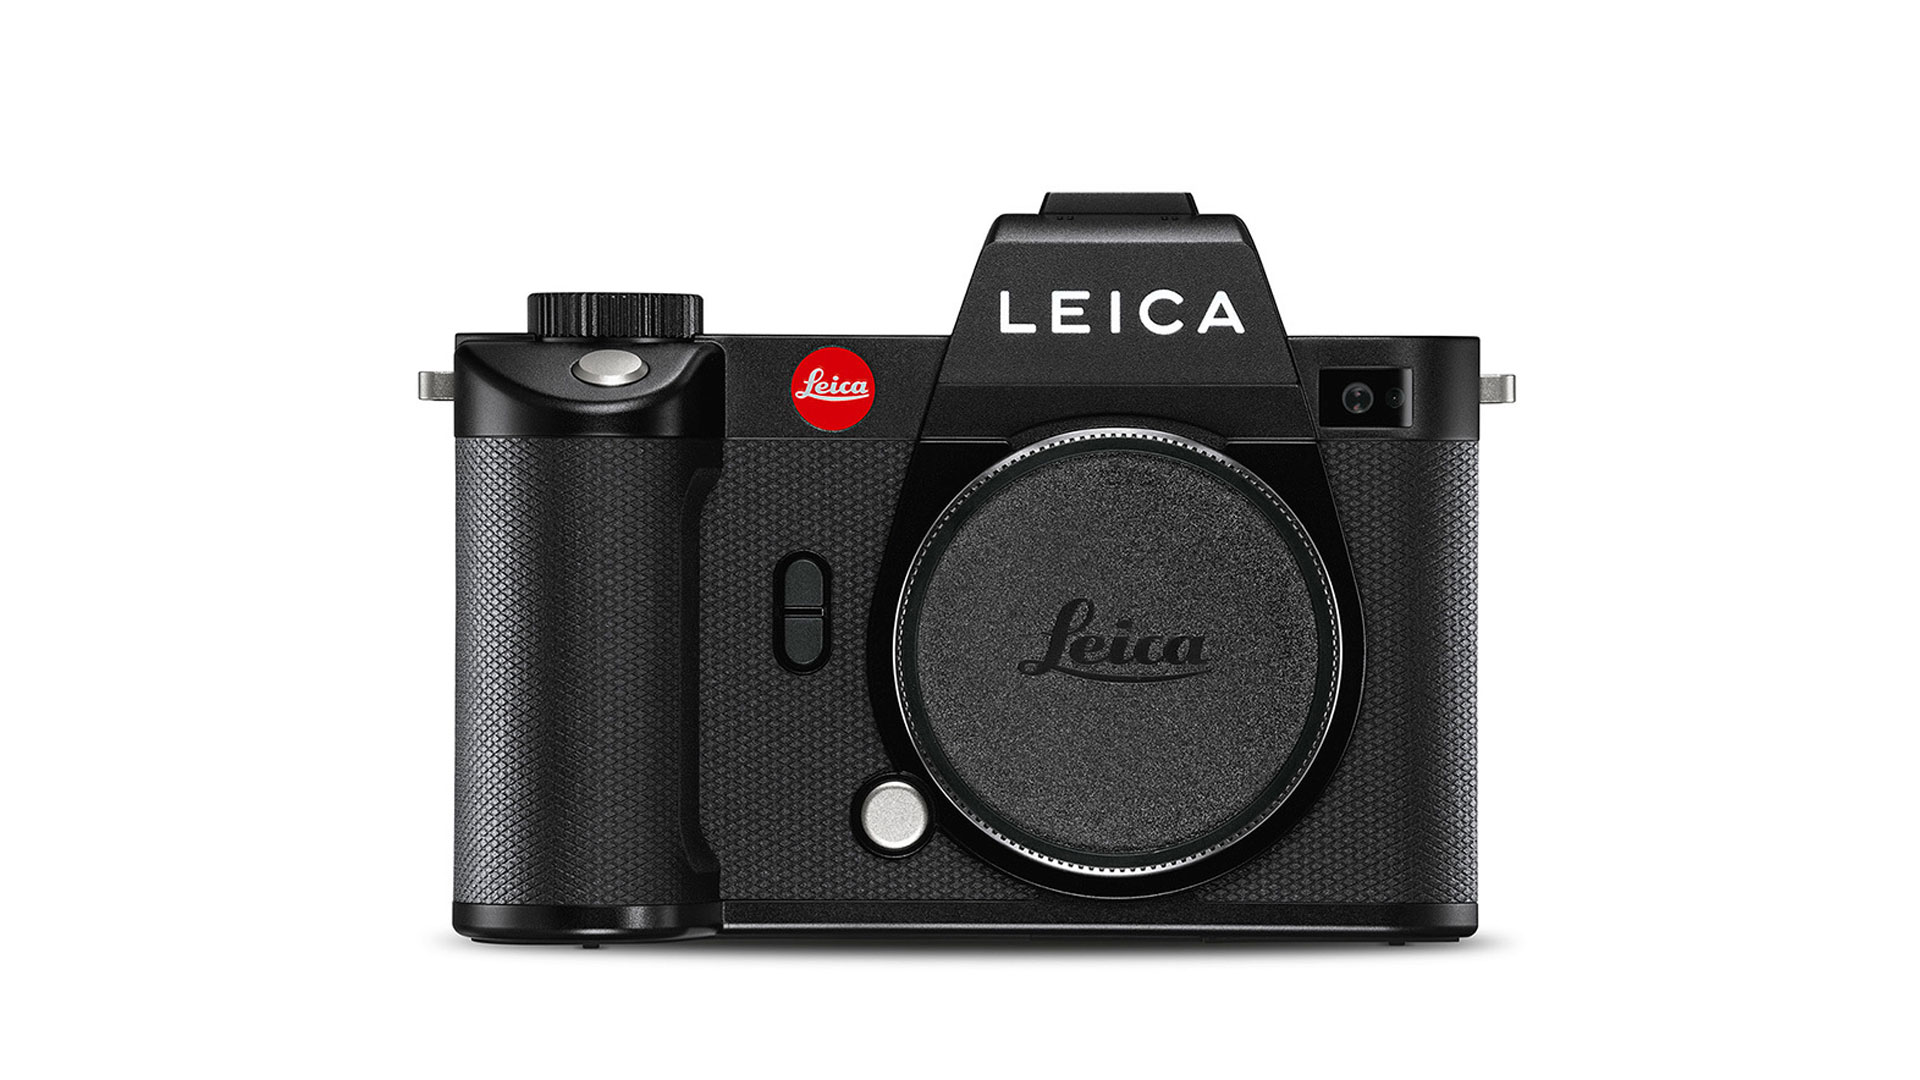 Leica SL2 mirrorless camera